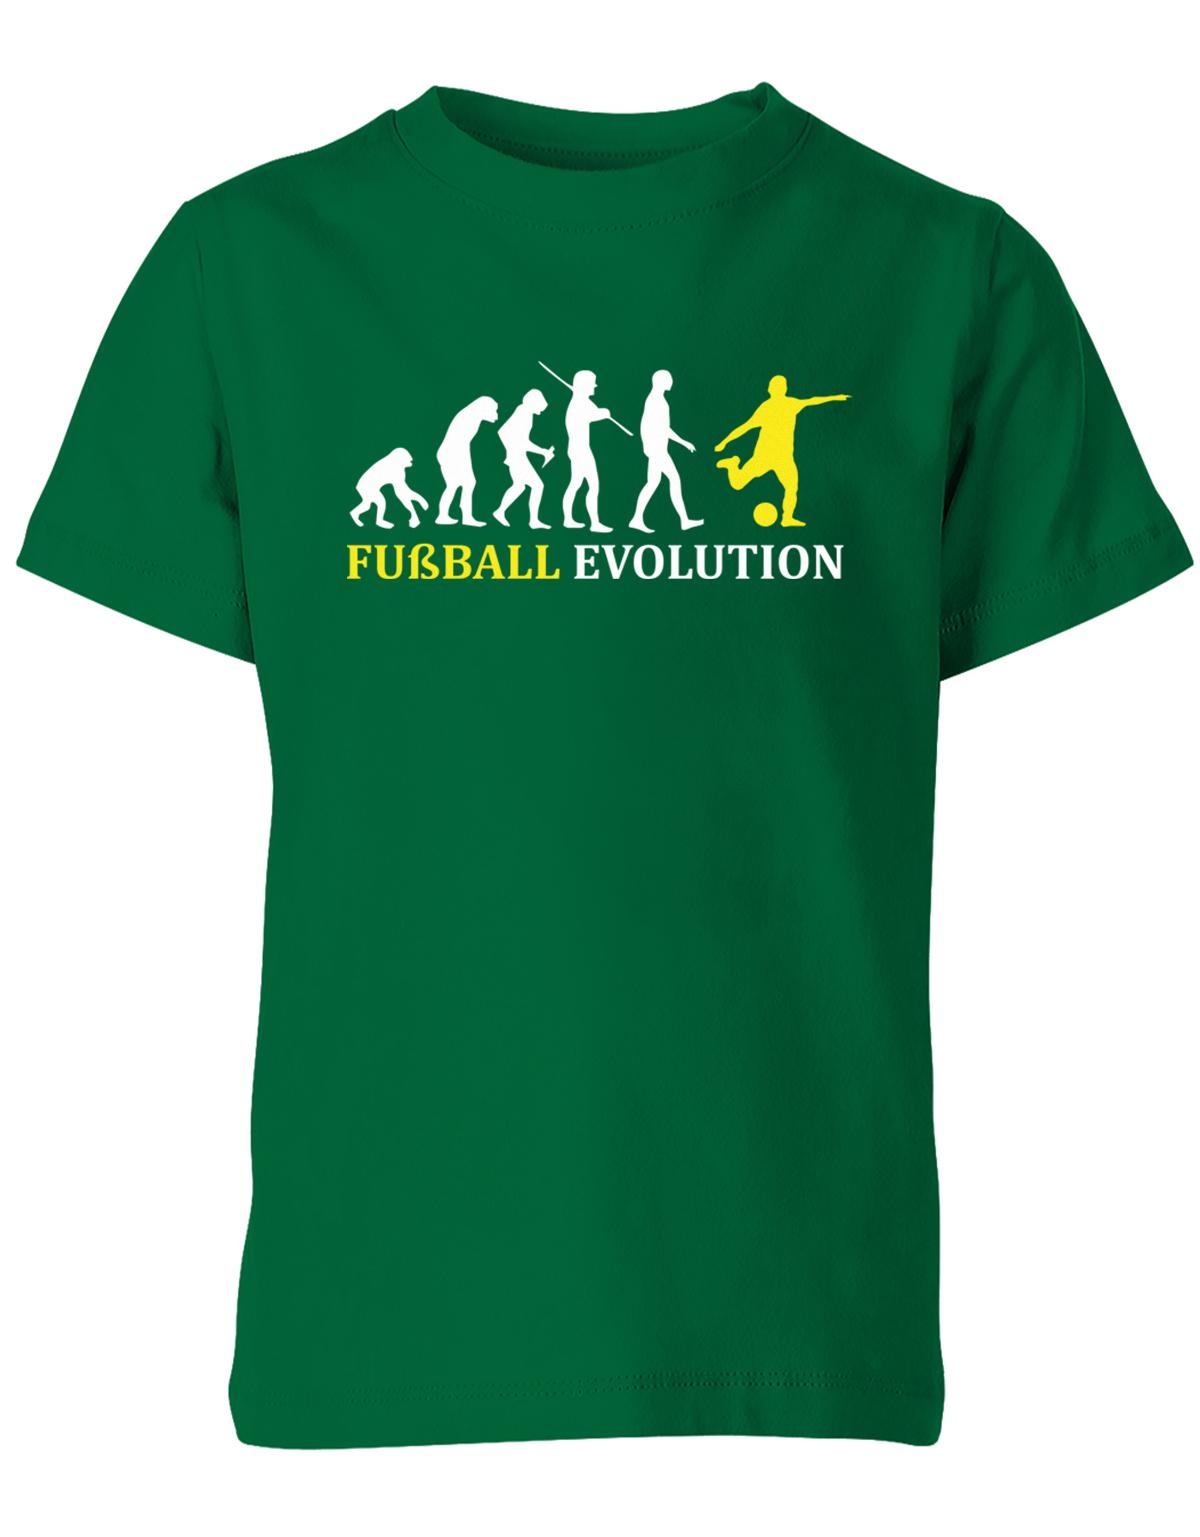 Fussball-Evolution-Kinder-Shirt-Gr-n-Gelb